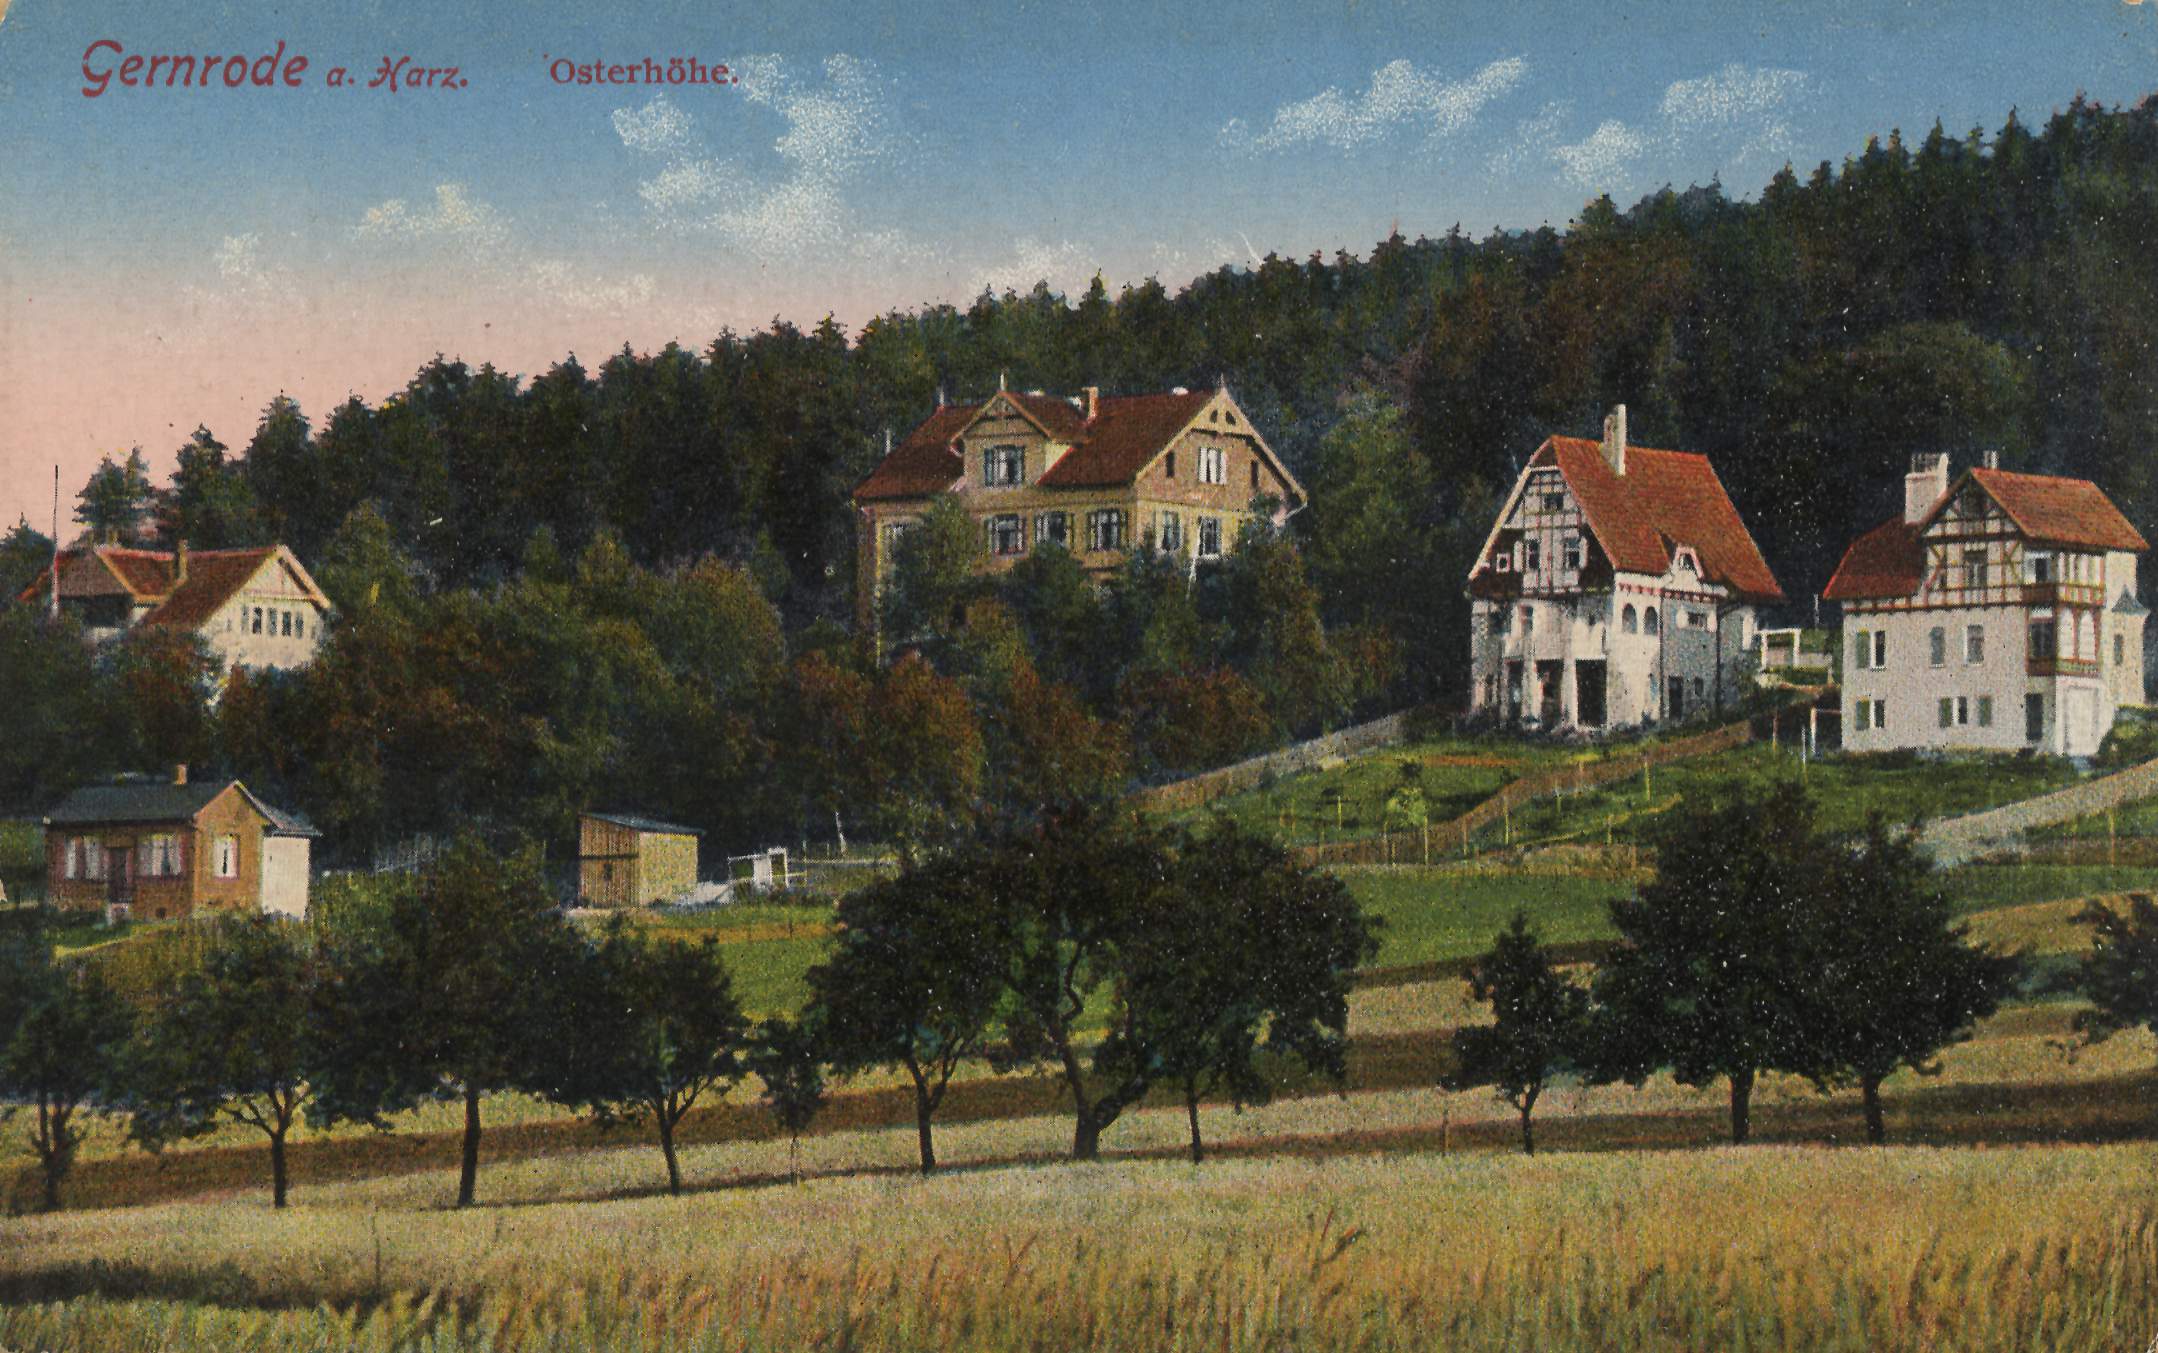 Gernrode Harz